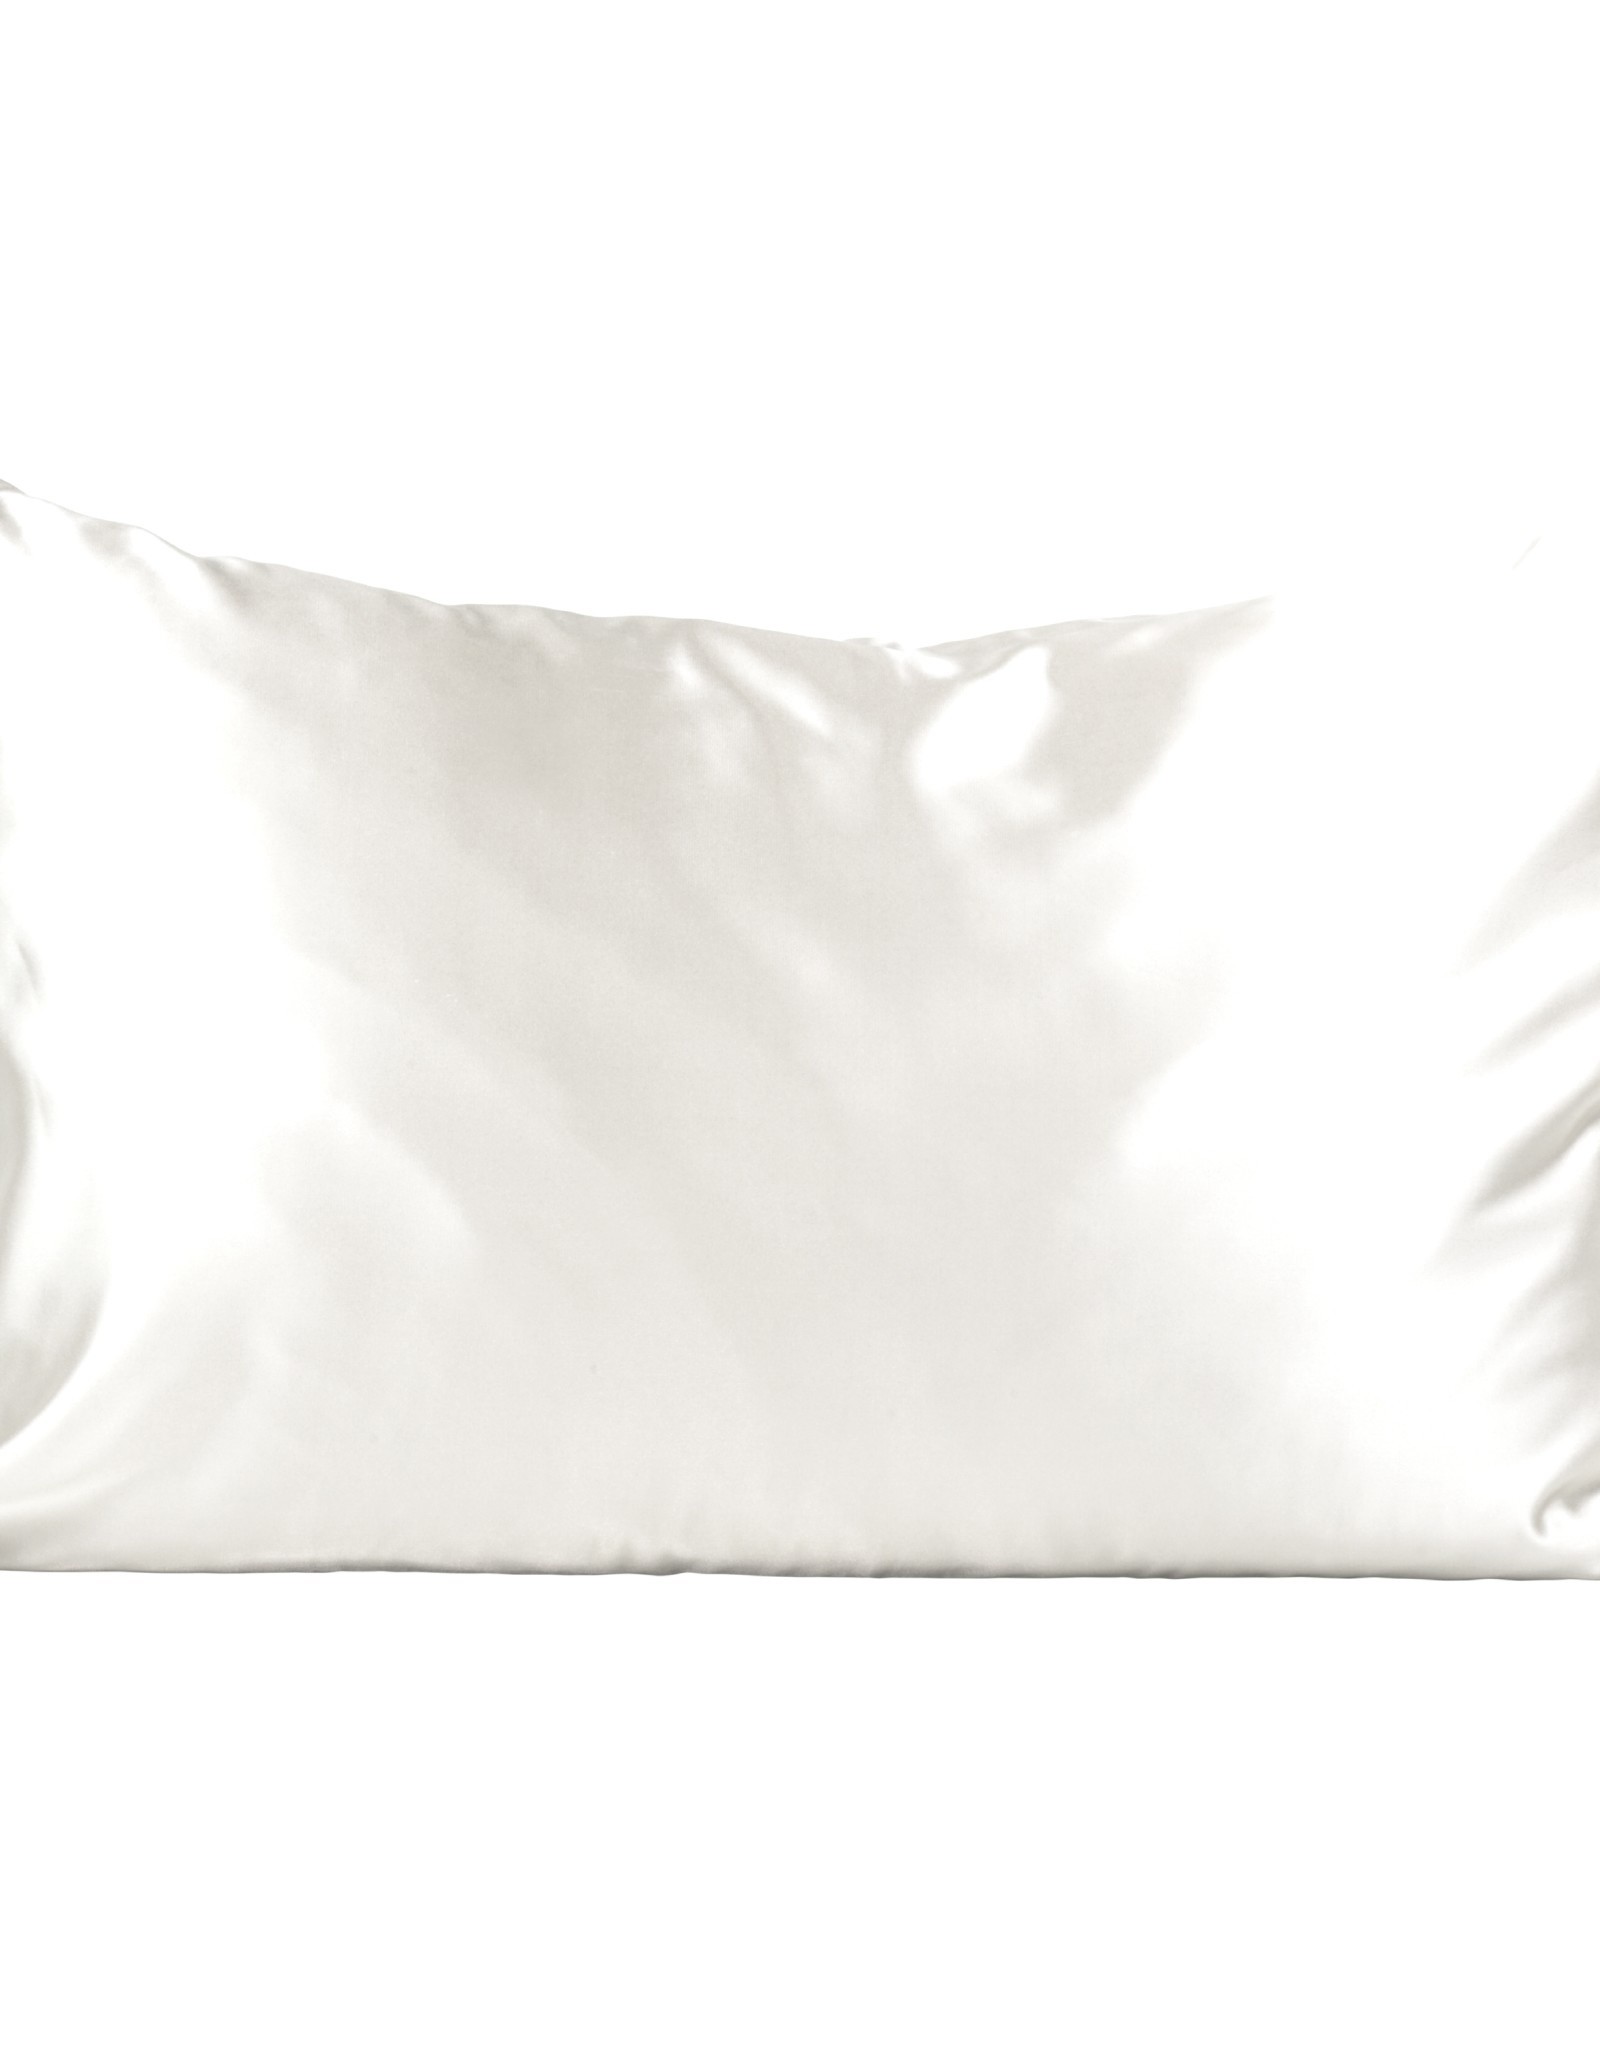 Satin Pillowcase, Ivory - King